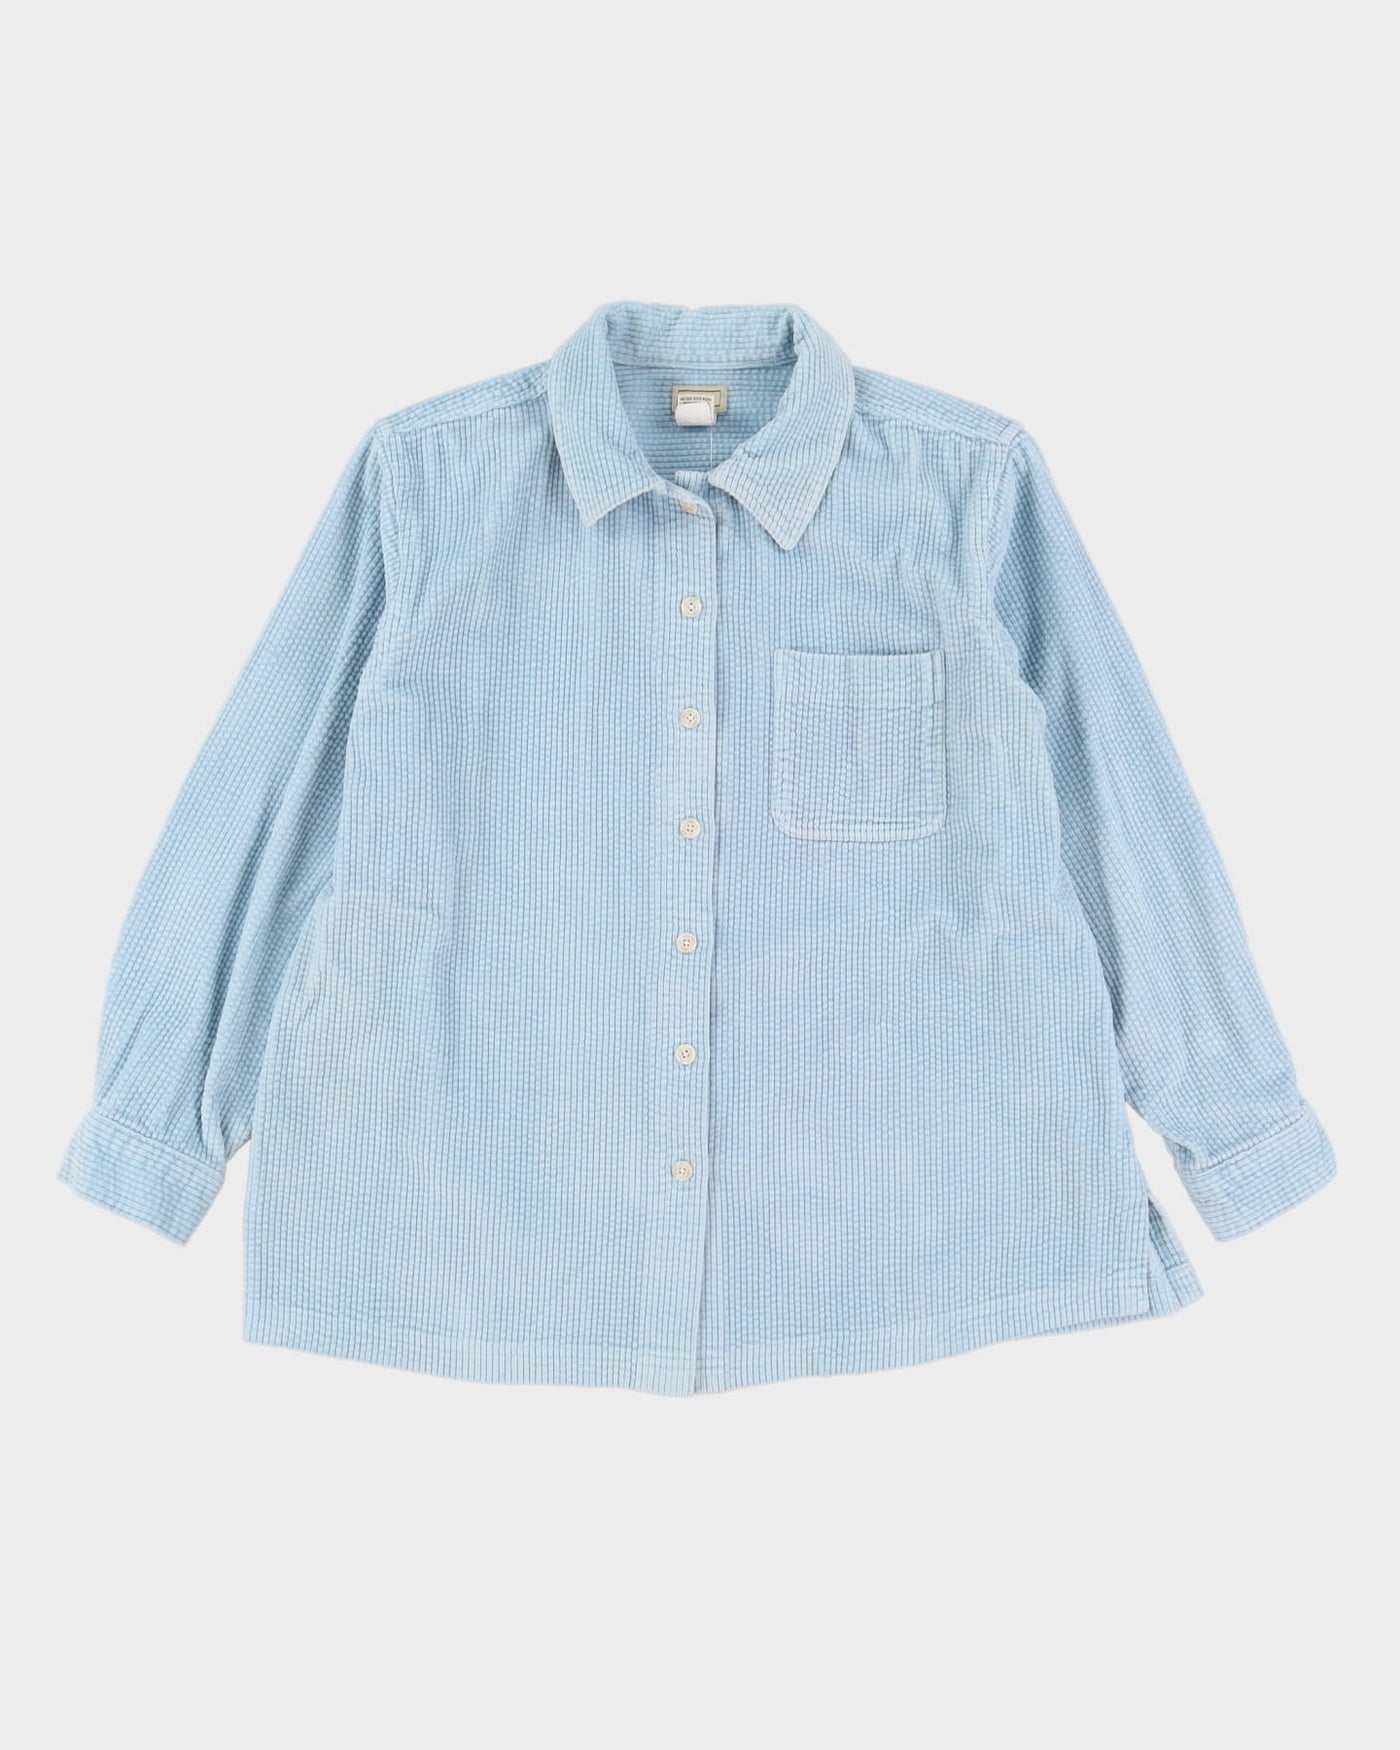 L.L. Bean Blue Cord Shirt - L